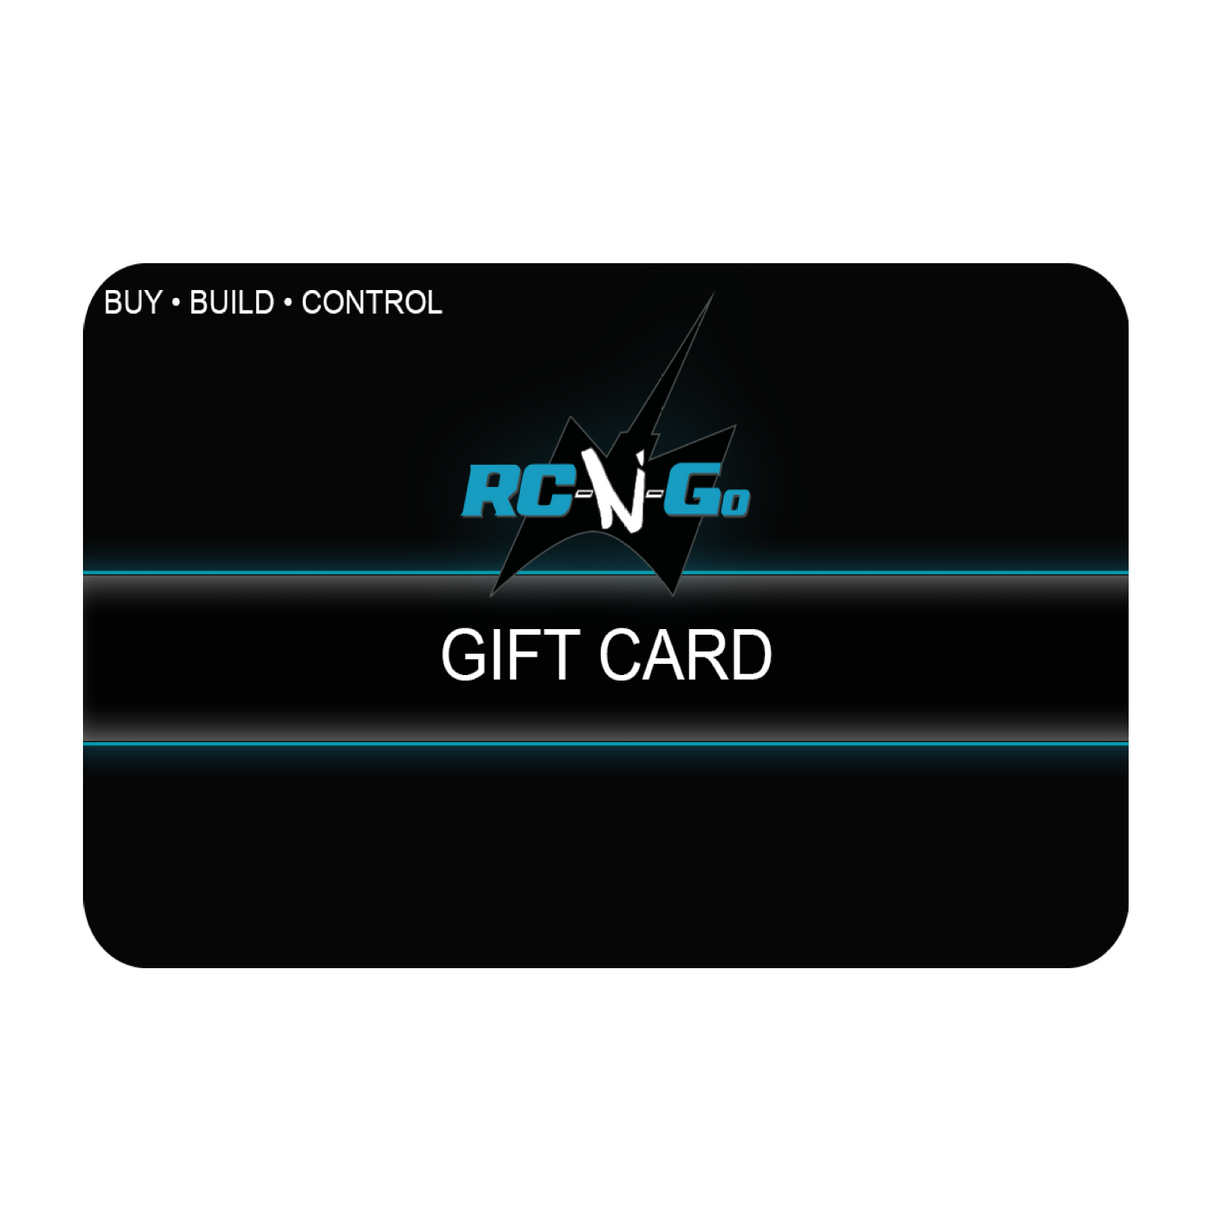 Physical Gift Card | RC-N-Go